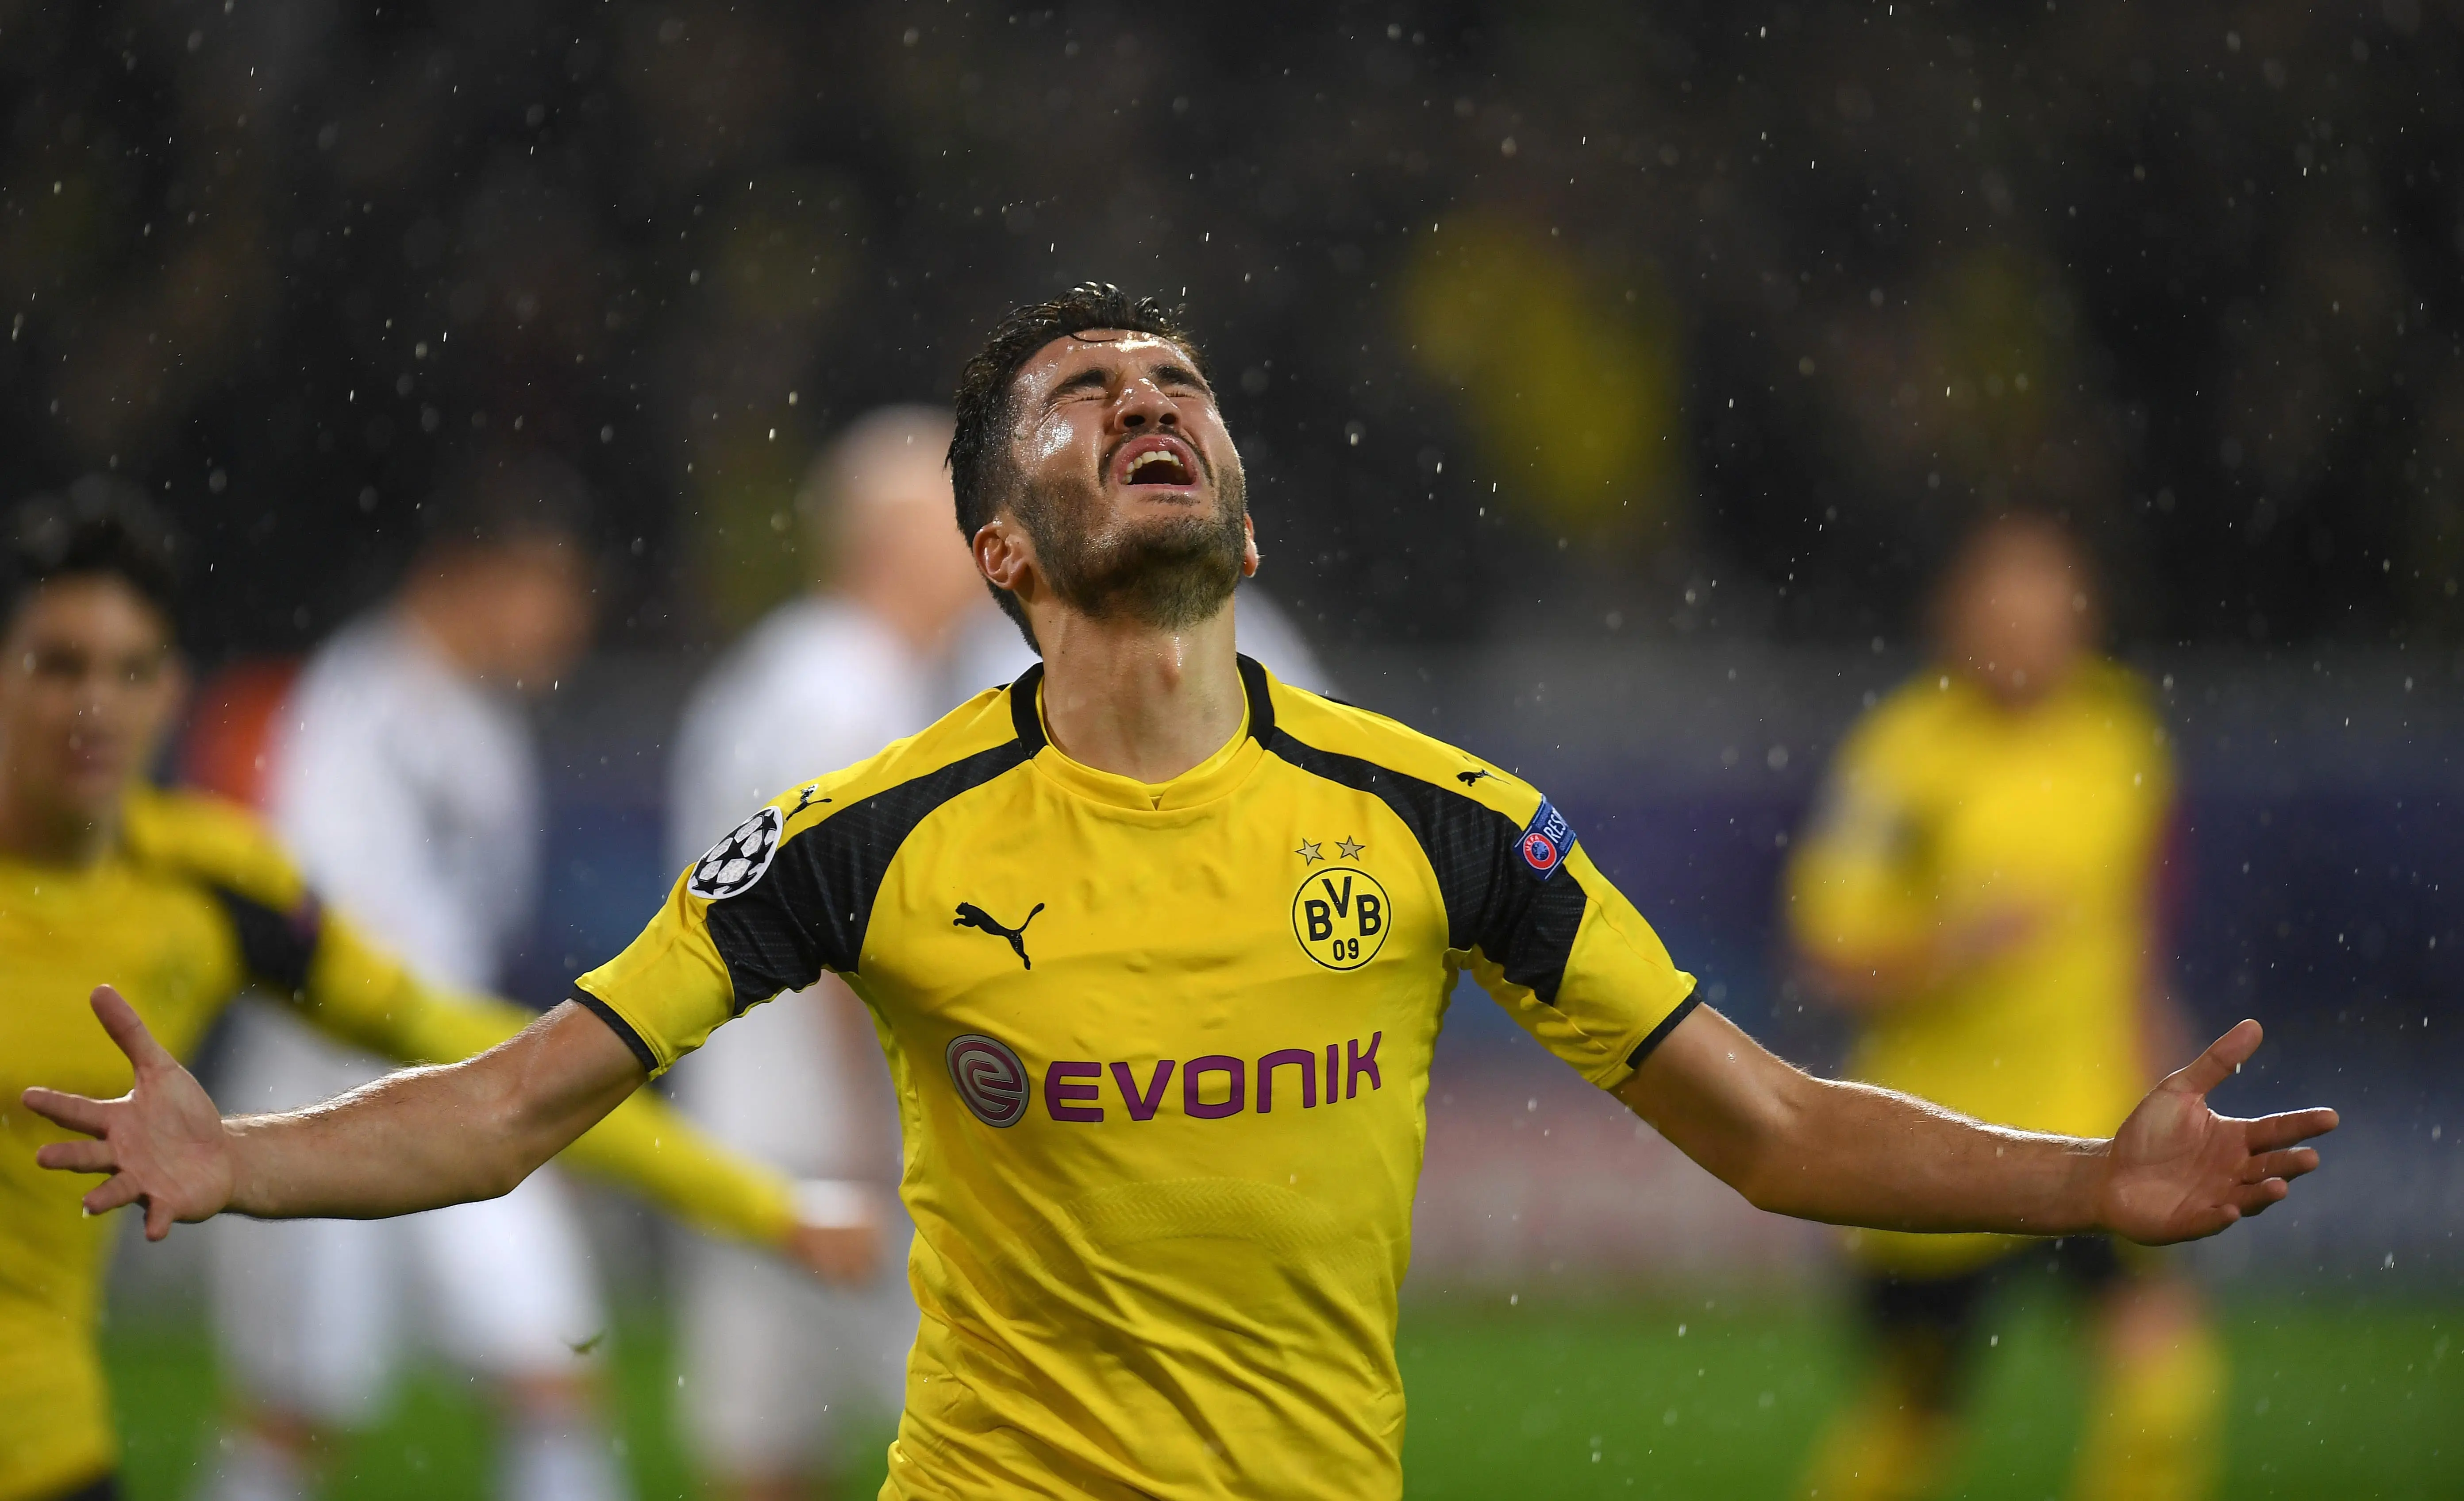 Gelandang Borussia Dortmund, Nuri Sahin. (AFP/Patrik Stollarz) 